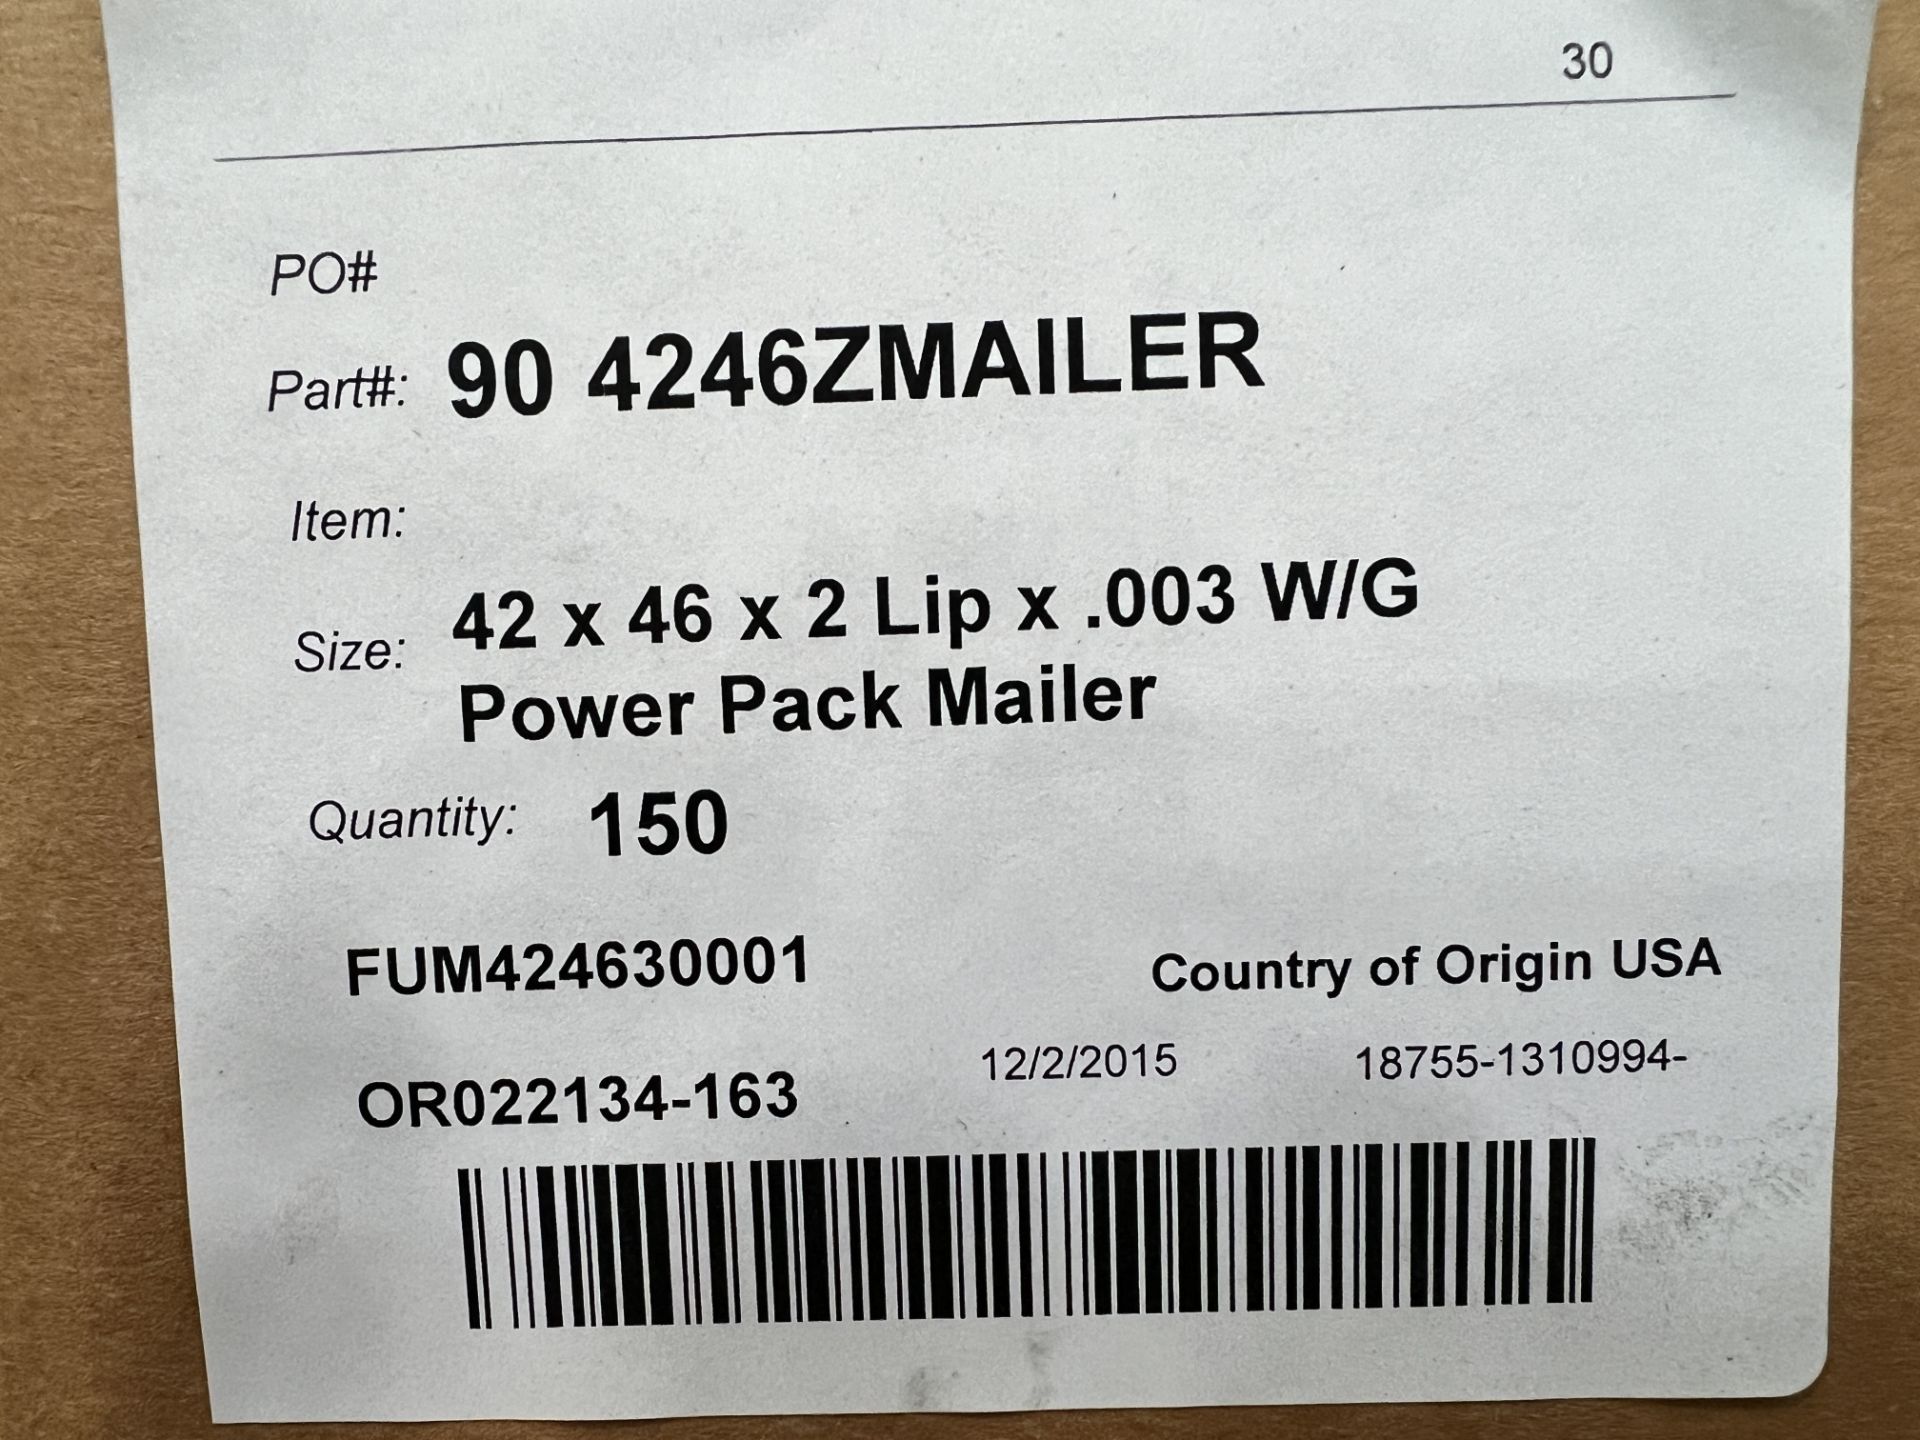 Power Pack Mailer 42" x 46" w/ 2" Lip